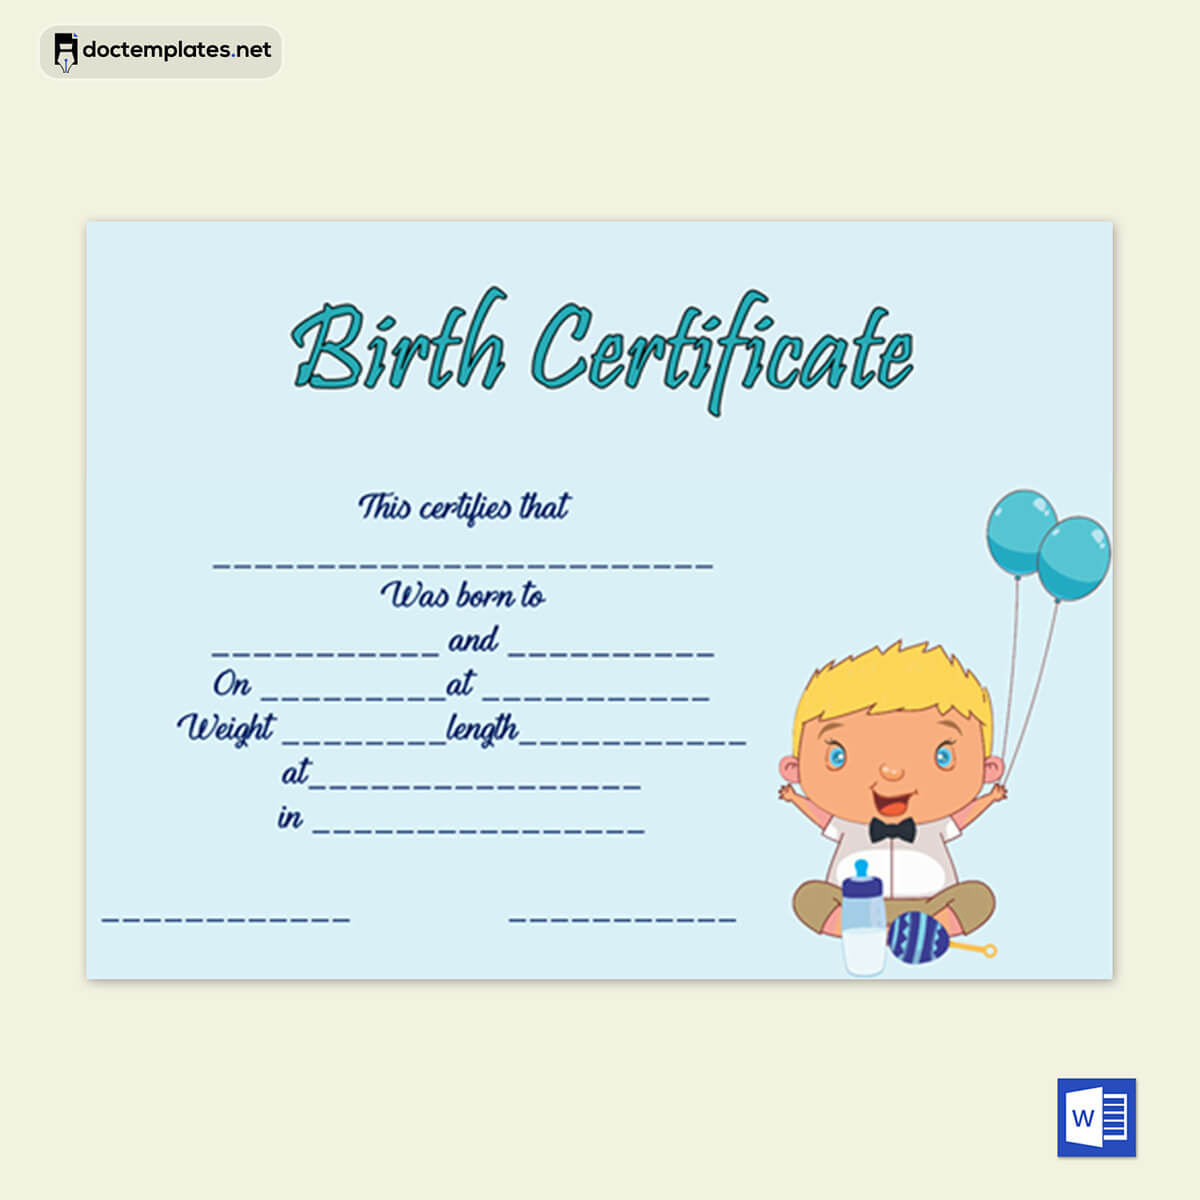 
birth certificate template google docs 02